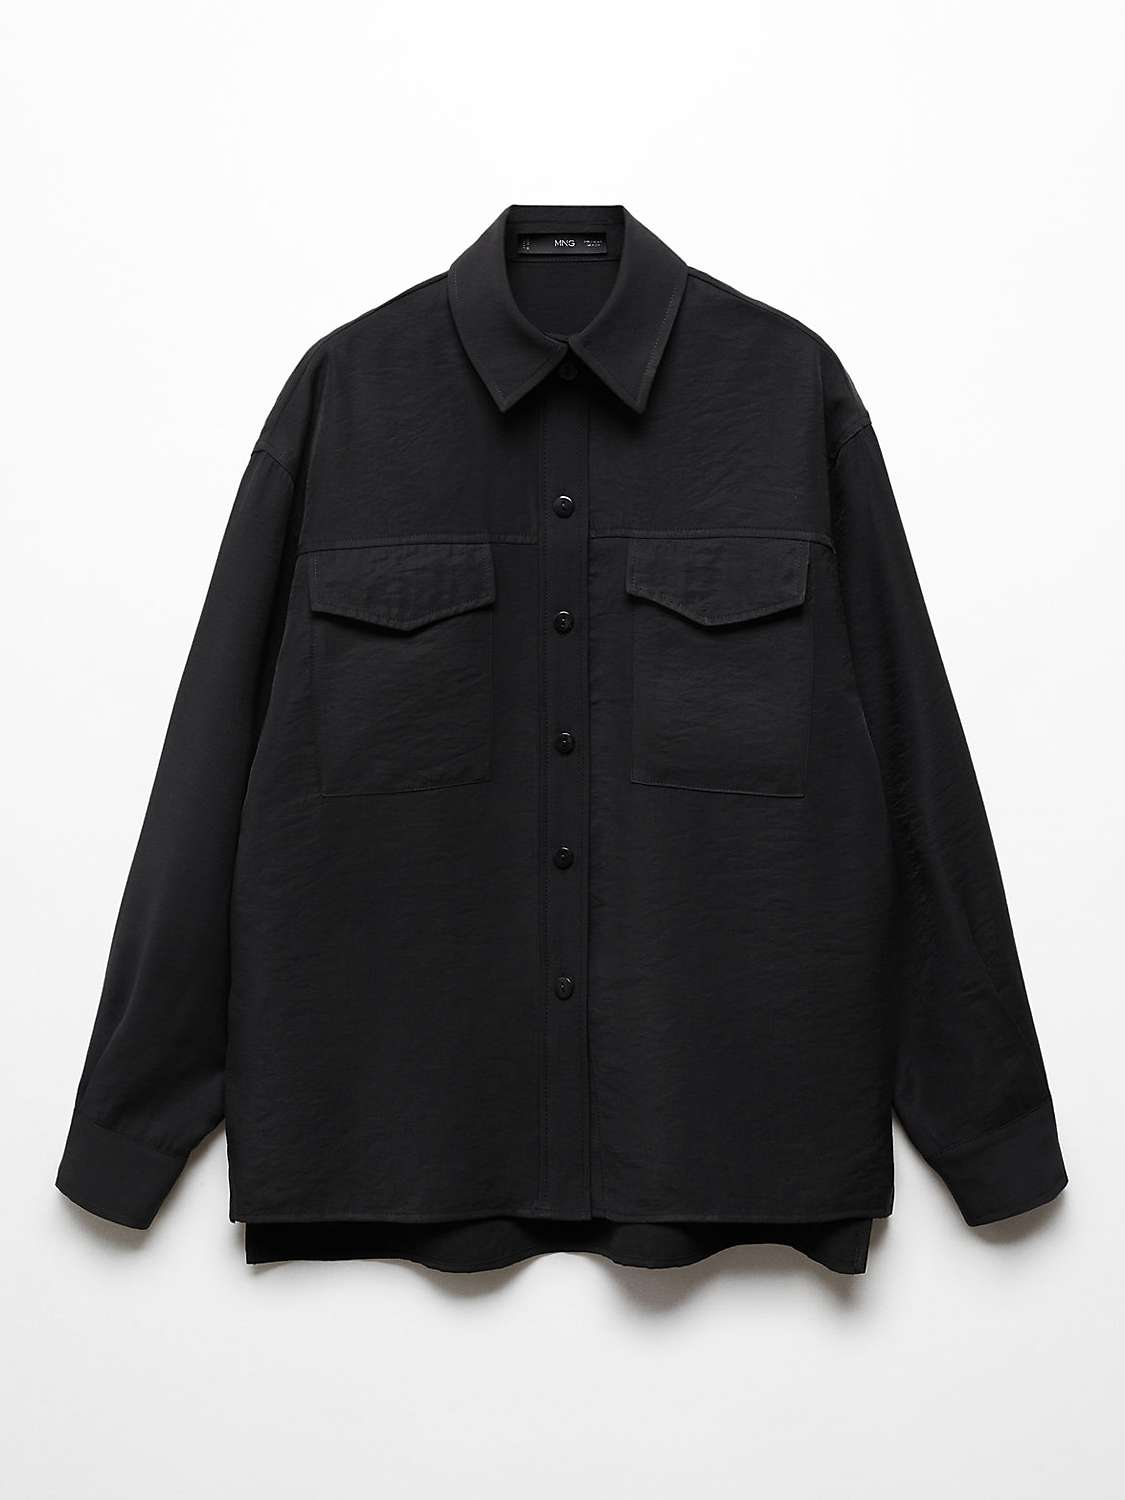 Buy Mango Perseo Shirt, Black Online at johnlewis.com